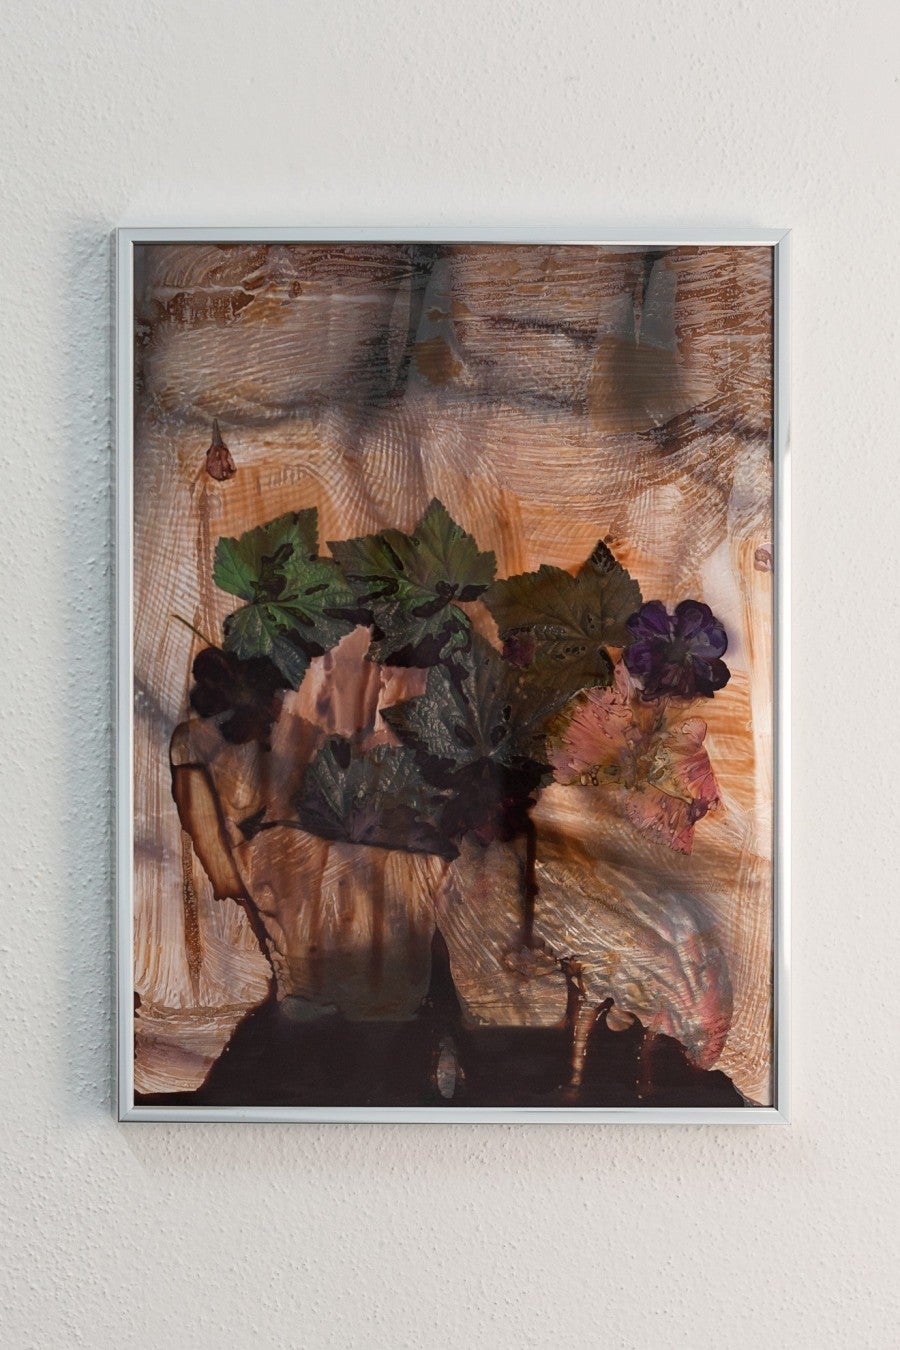 Chloé Quenum, Augure, 2016. Printing and plants, 30 x 40 cm.